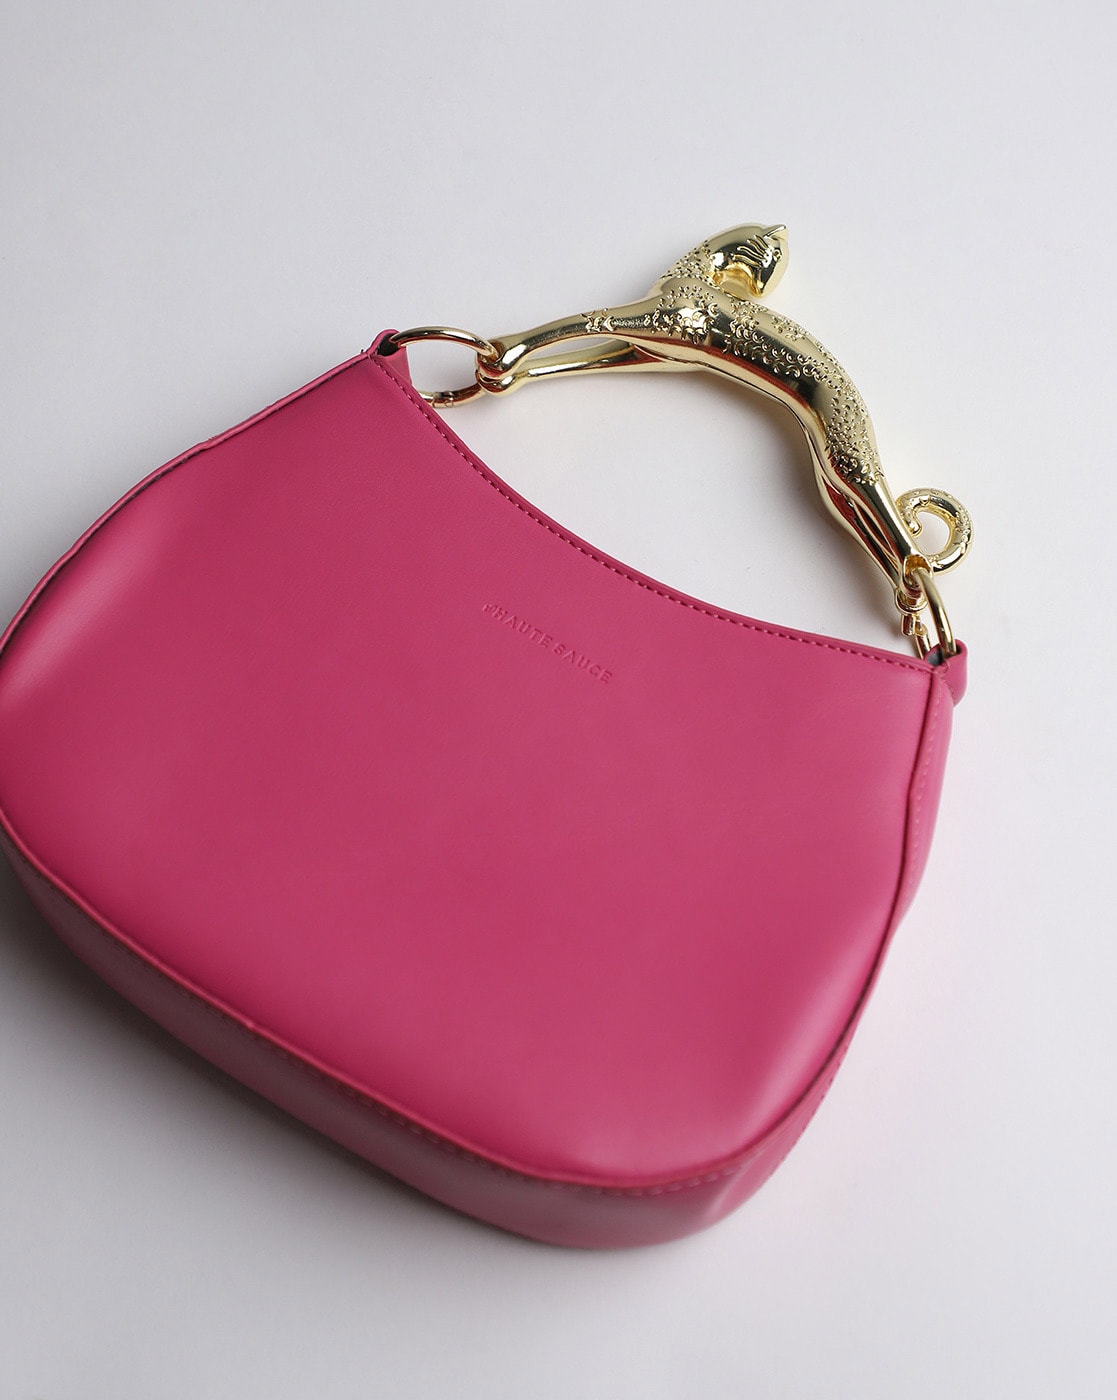 Tiny Frock Shop Zuru Mini Brands Fashion Pink Quilted Bag Series 1